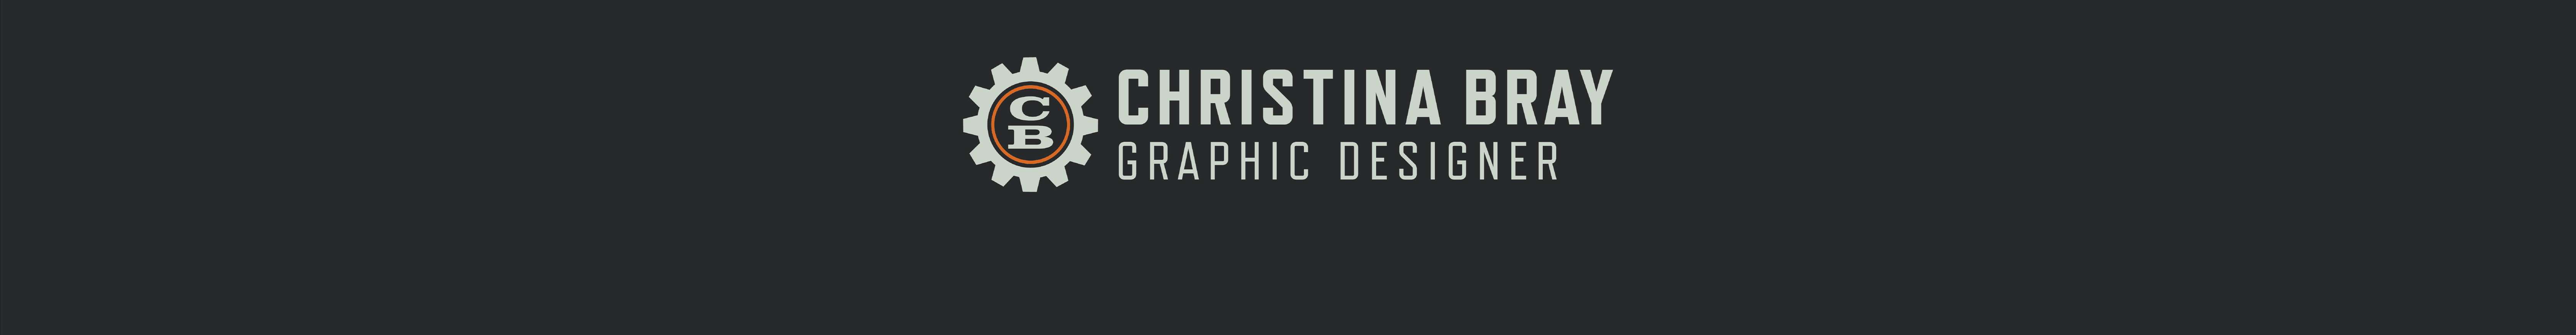 Christina Bray's profile banner